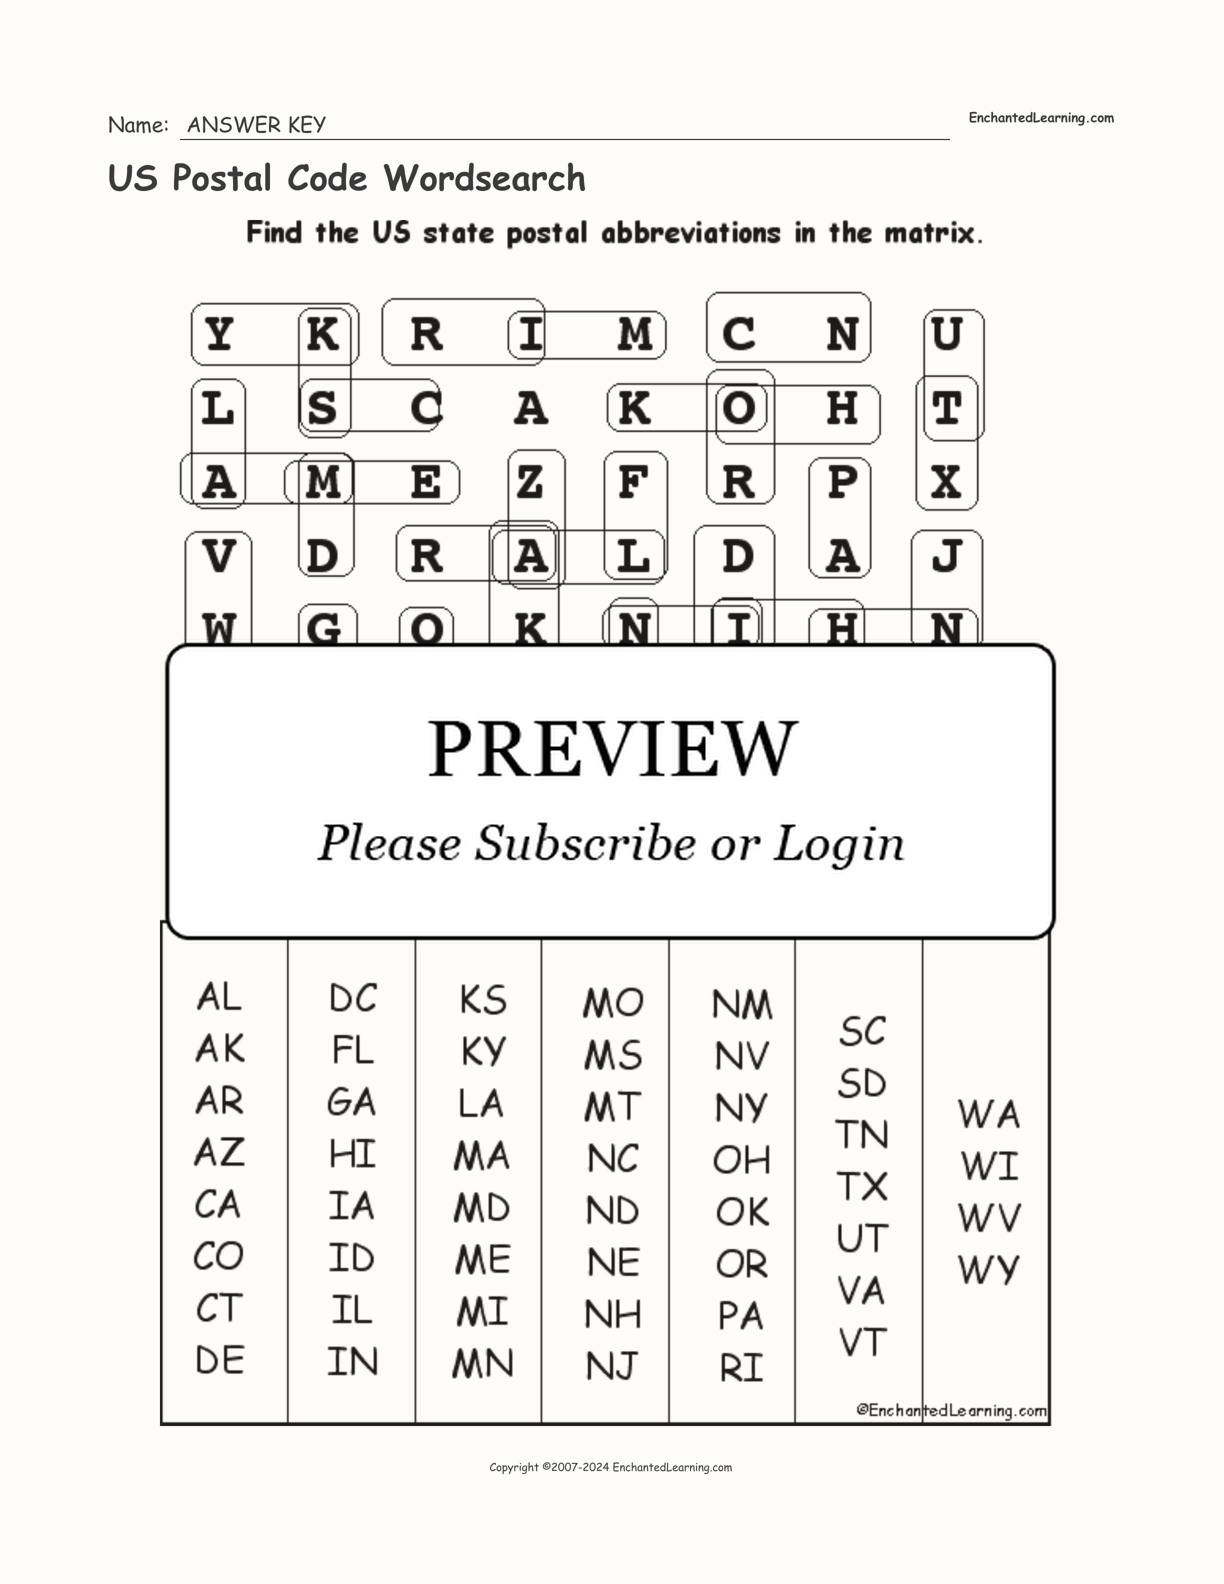 US Postal Code Wordsearch interactive worksheet page 2